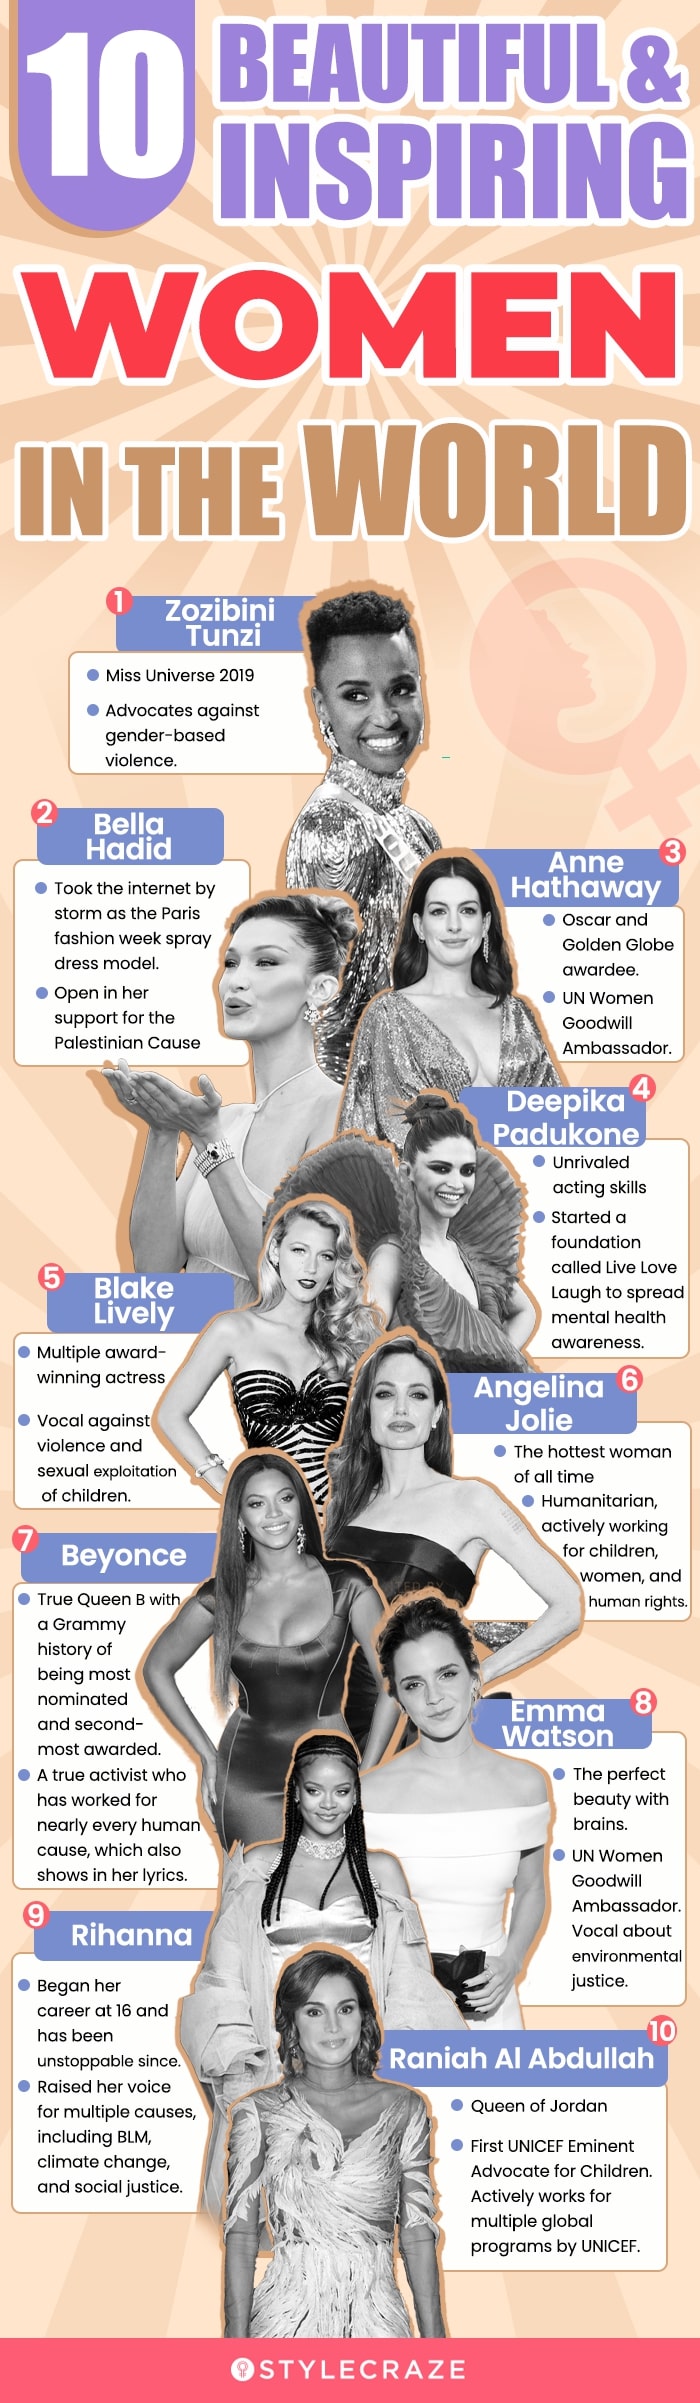 10 beautiful & inspiring women in the world [infographic]